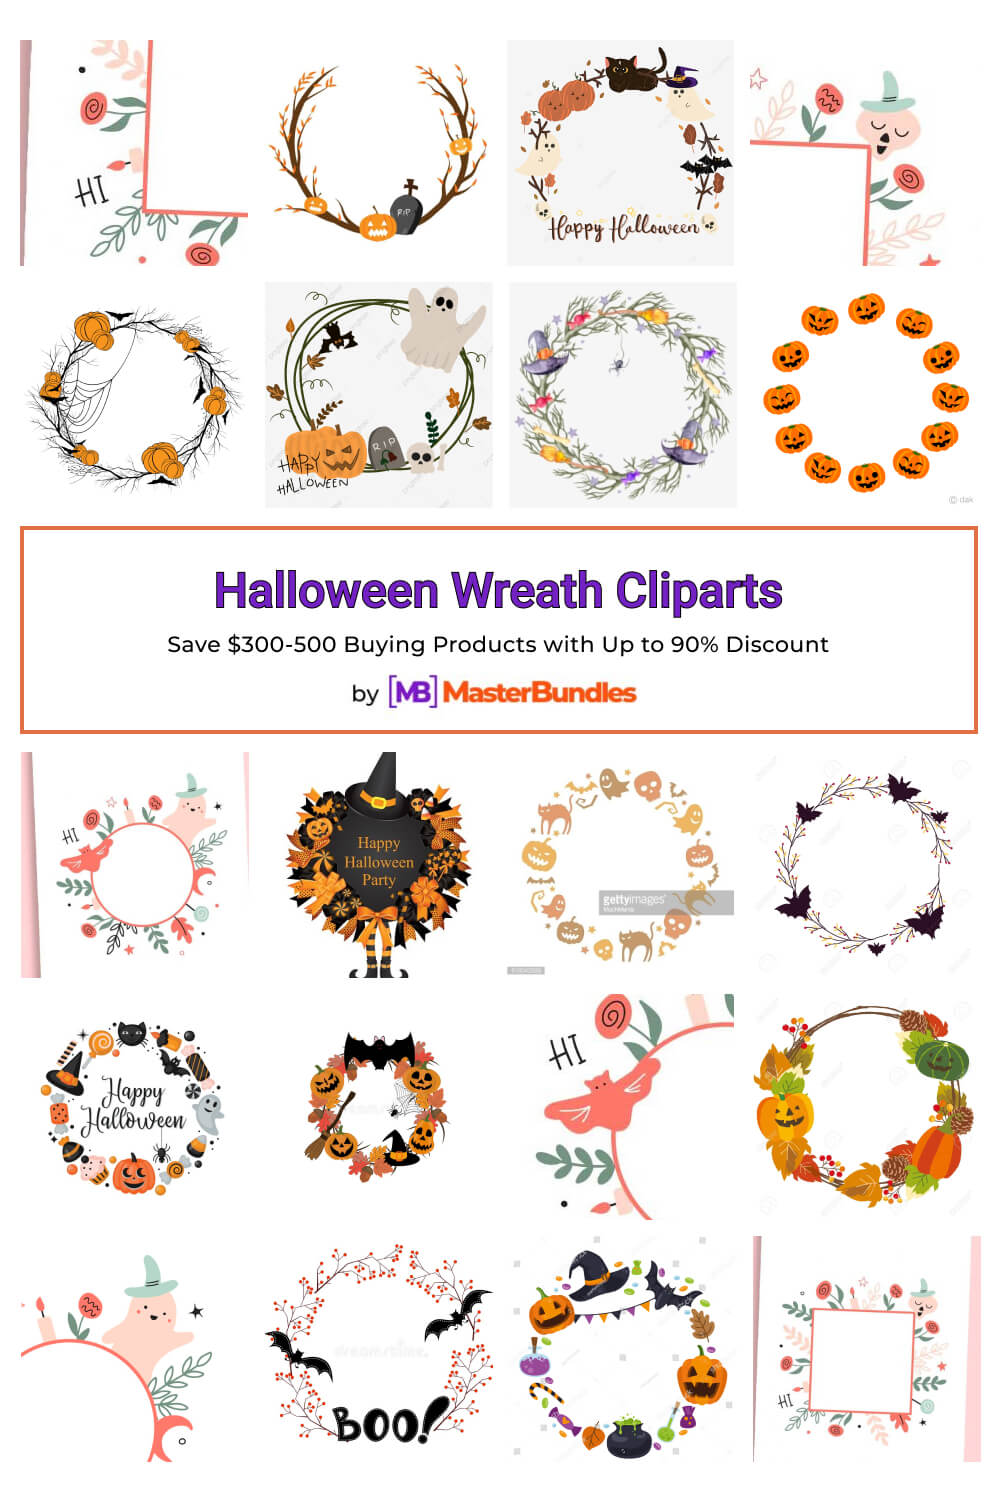 halloween wreath cliparts pinterest image.